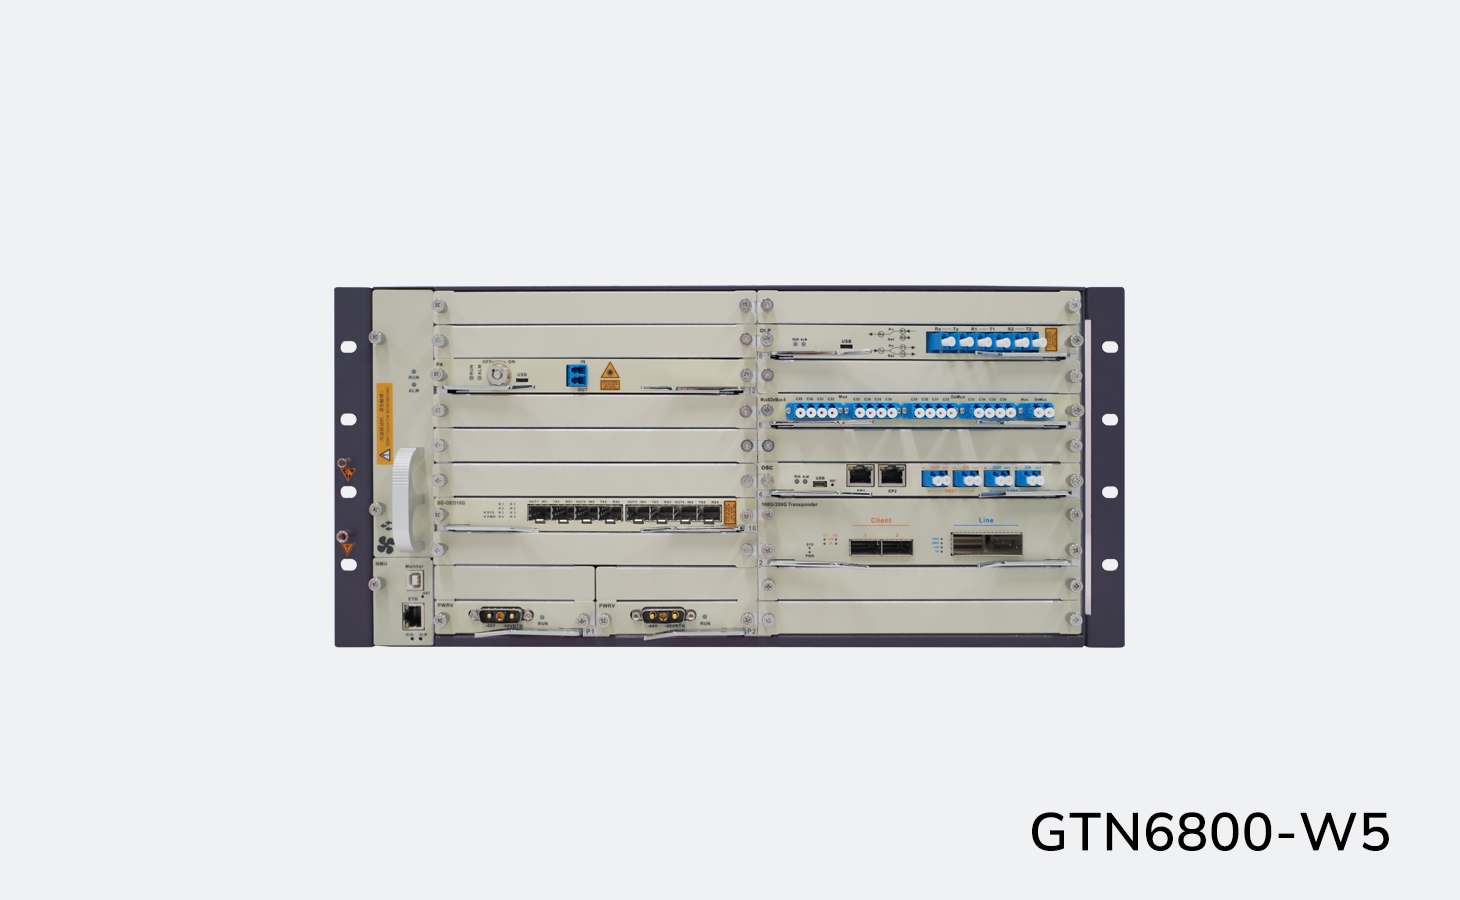 GTN6800-W Series